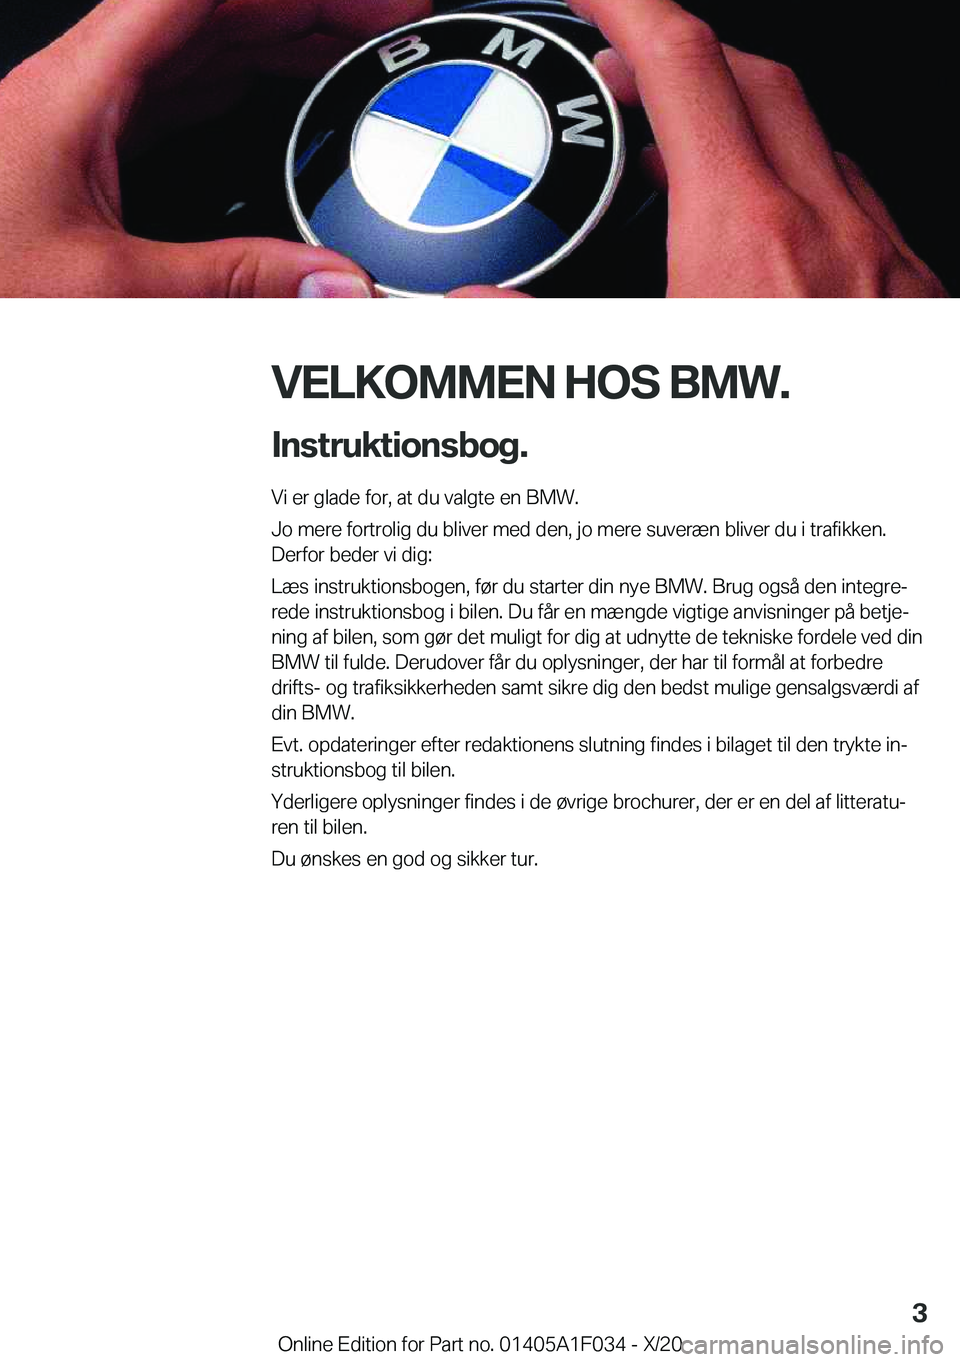 BMW X1 2021  InstruktionsbØger (in Danish) �V�E�L�K�O�M�M�E�N��H�O�S��B�M�W�.
�I�n�s�t�r�u�k�t�i�o�n�s�b�o�g�. �V�i��e�r��g�l�a�d�e��f�o�r�,��a�t��d�u��v�a�l�g�t�e��e�n��B�M�W�.
�J�o��m�e�r�e��f�o�r�t�r�o�l�i�g��d�u��b�l�i�v�e�r�